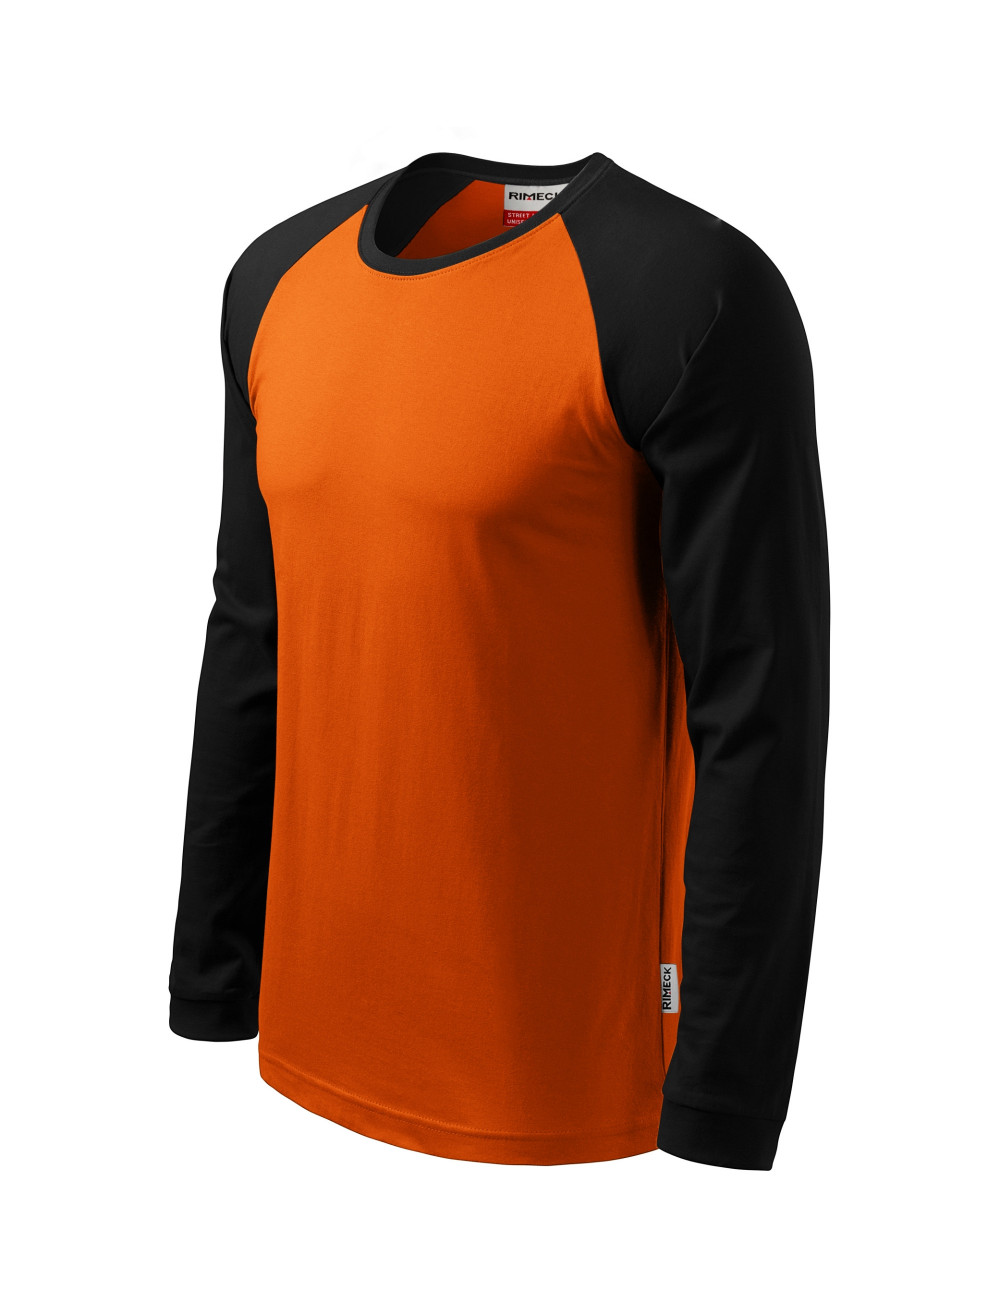 Unisex street t-shirt ls 130 orange Malfini Rimeck®